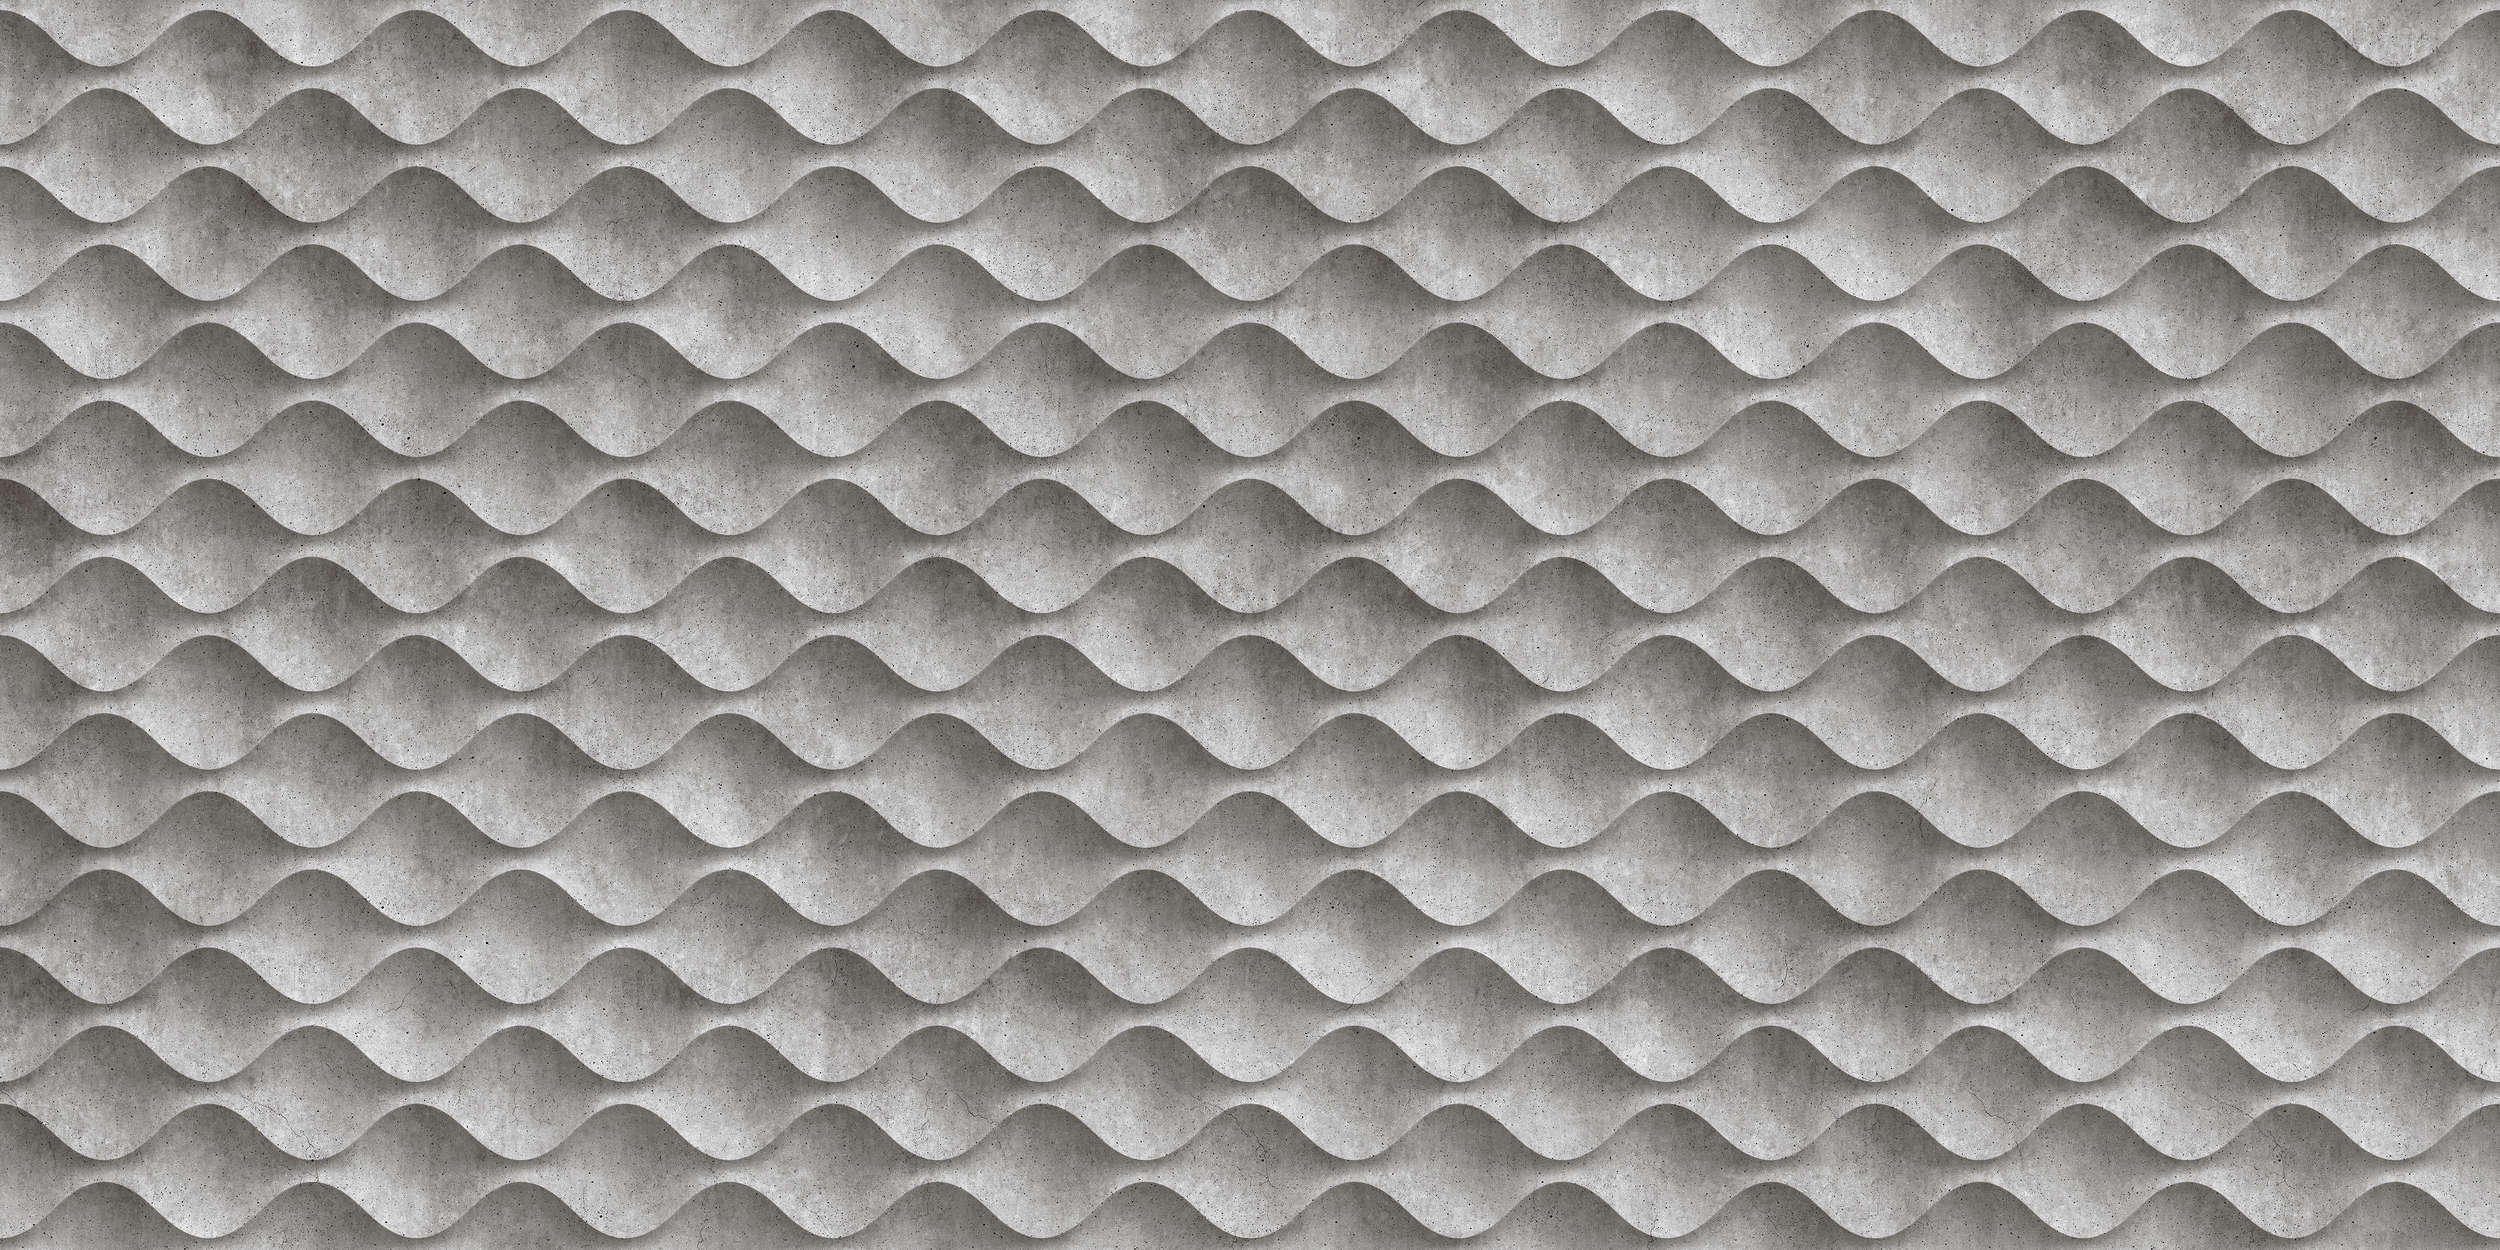             Concrete 1 - Cool 3D Concrete Waves Wallpaper - Grey, Black | Premium Smooth Non-woven
        